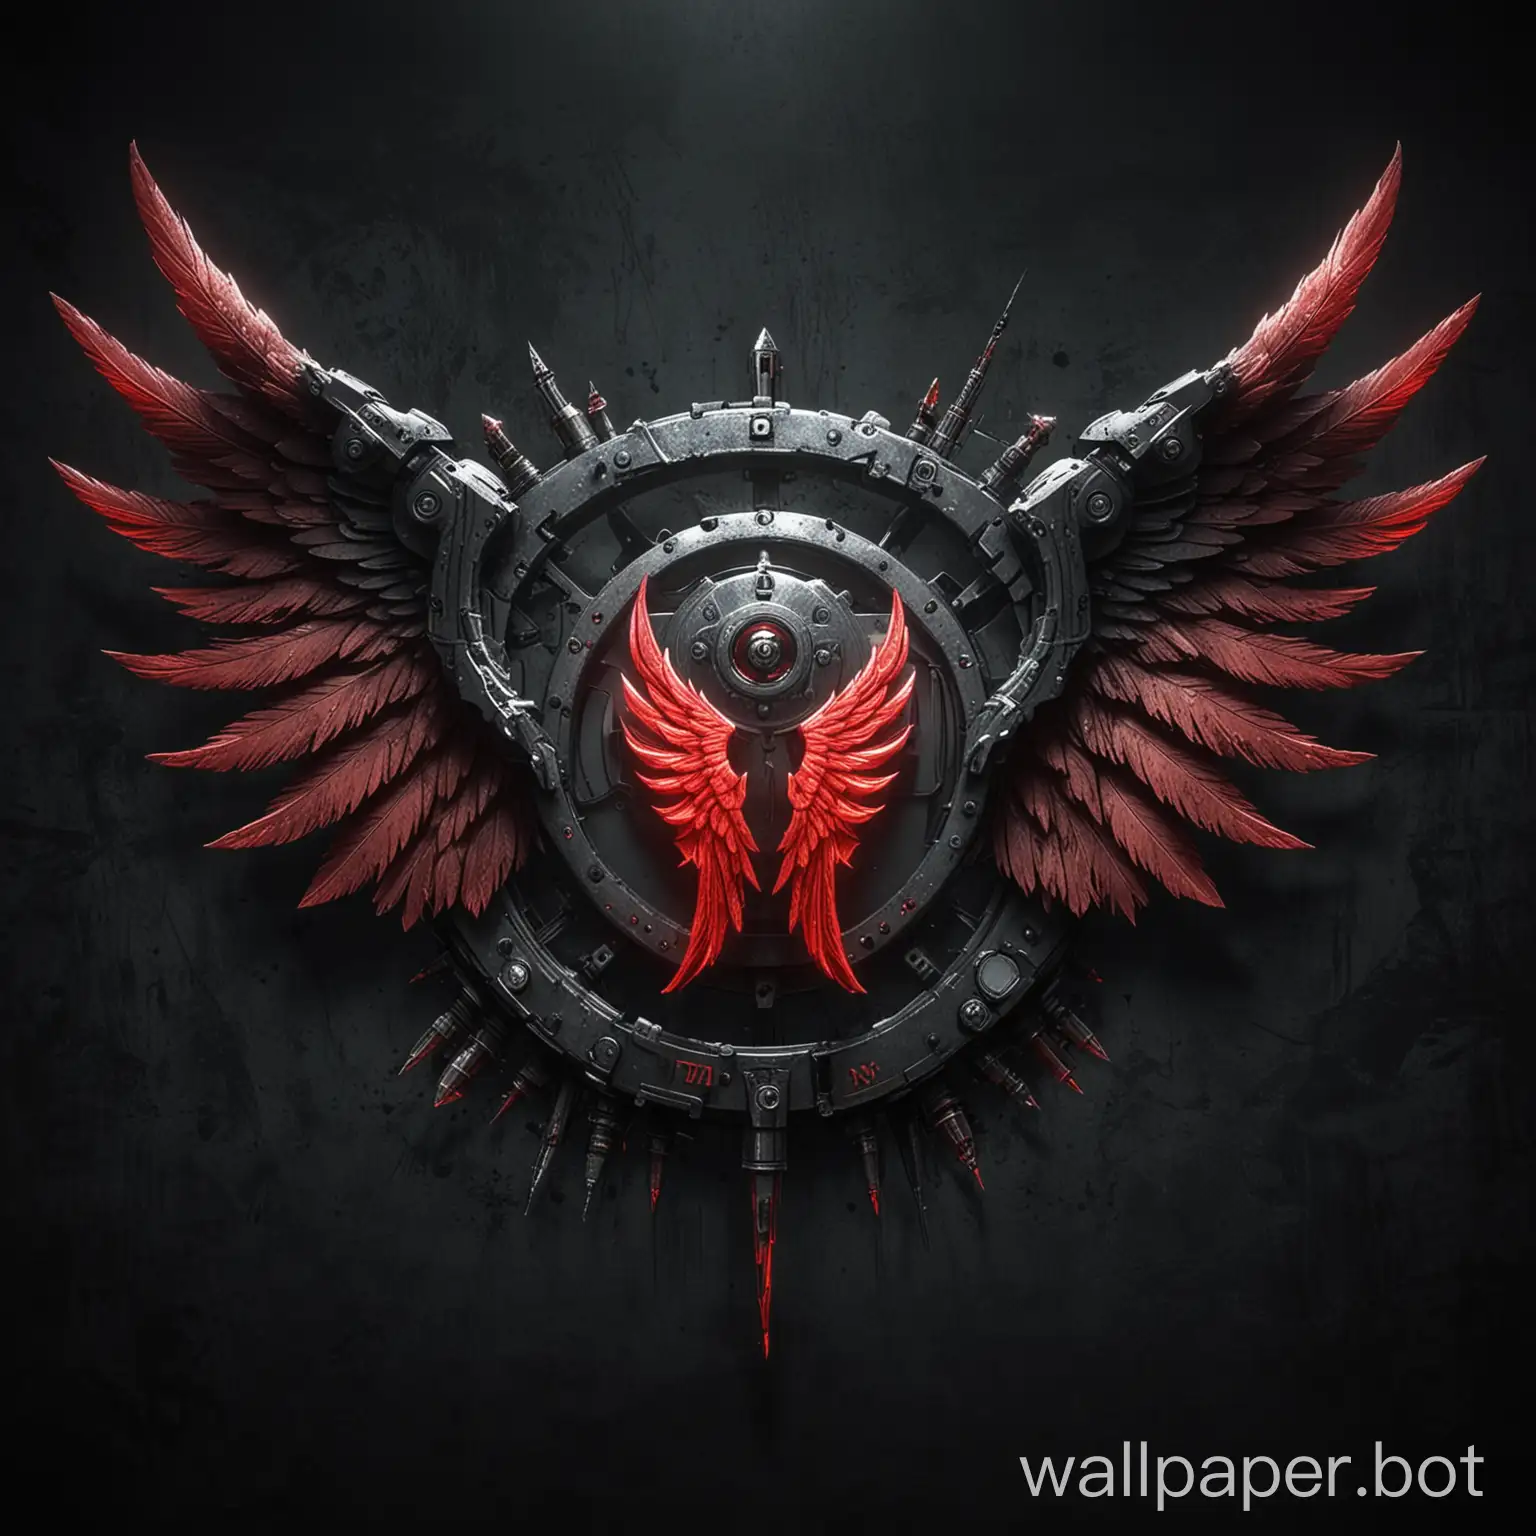 Dark-Cyberpunk-Wallpaper-with-Red-Angel-Wing-Logo